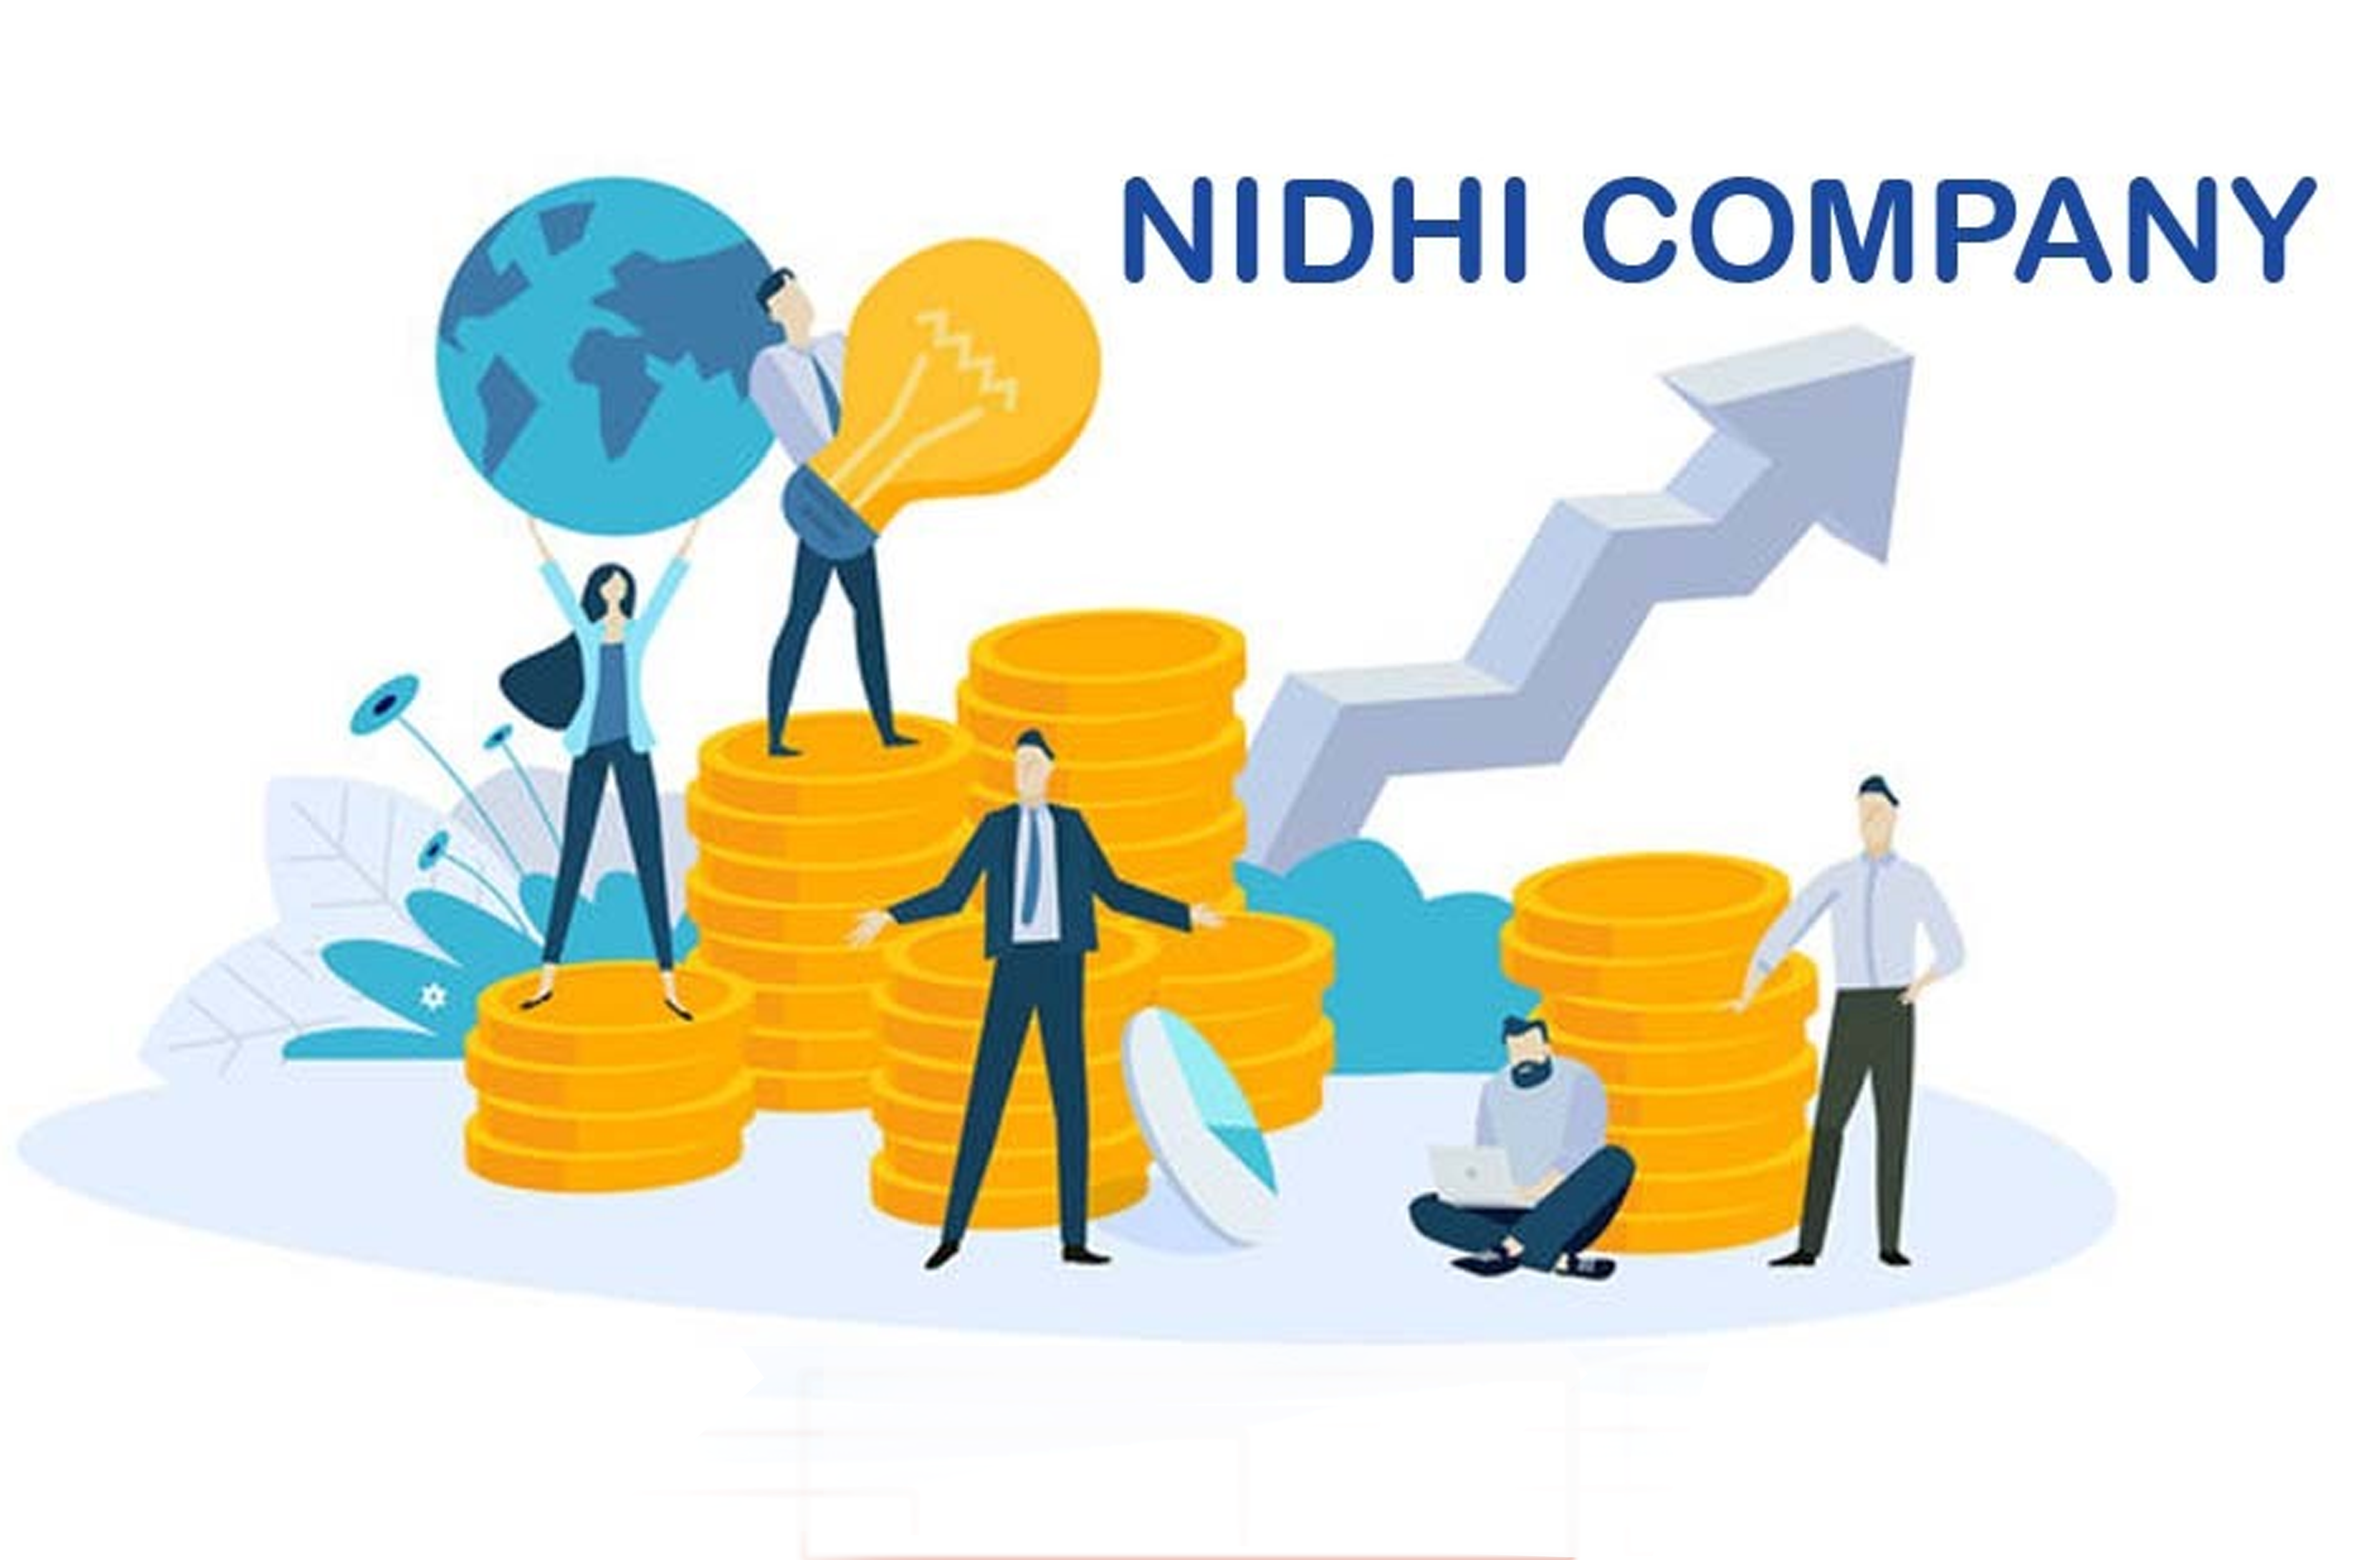 minimum requirements of nidhi company  